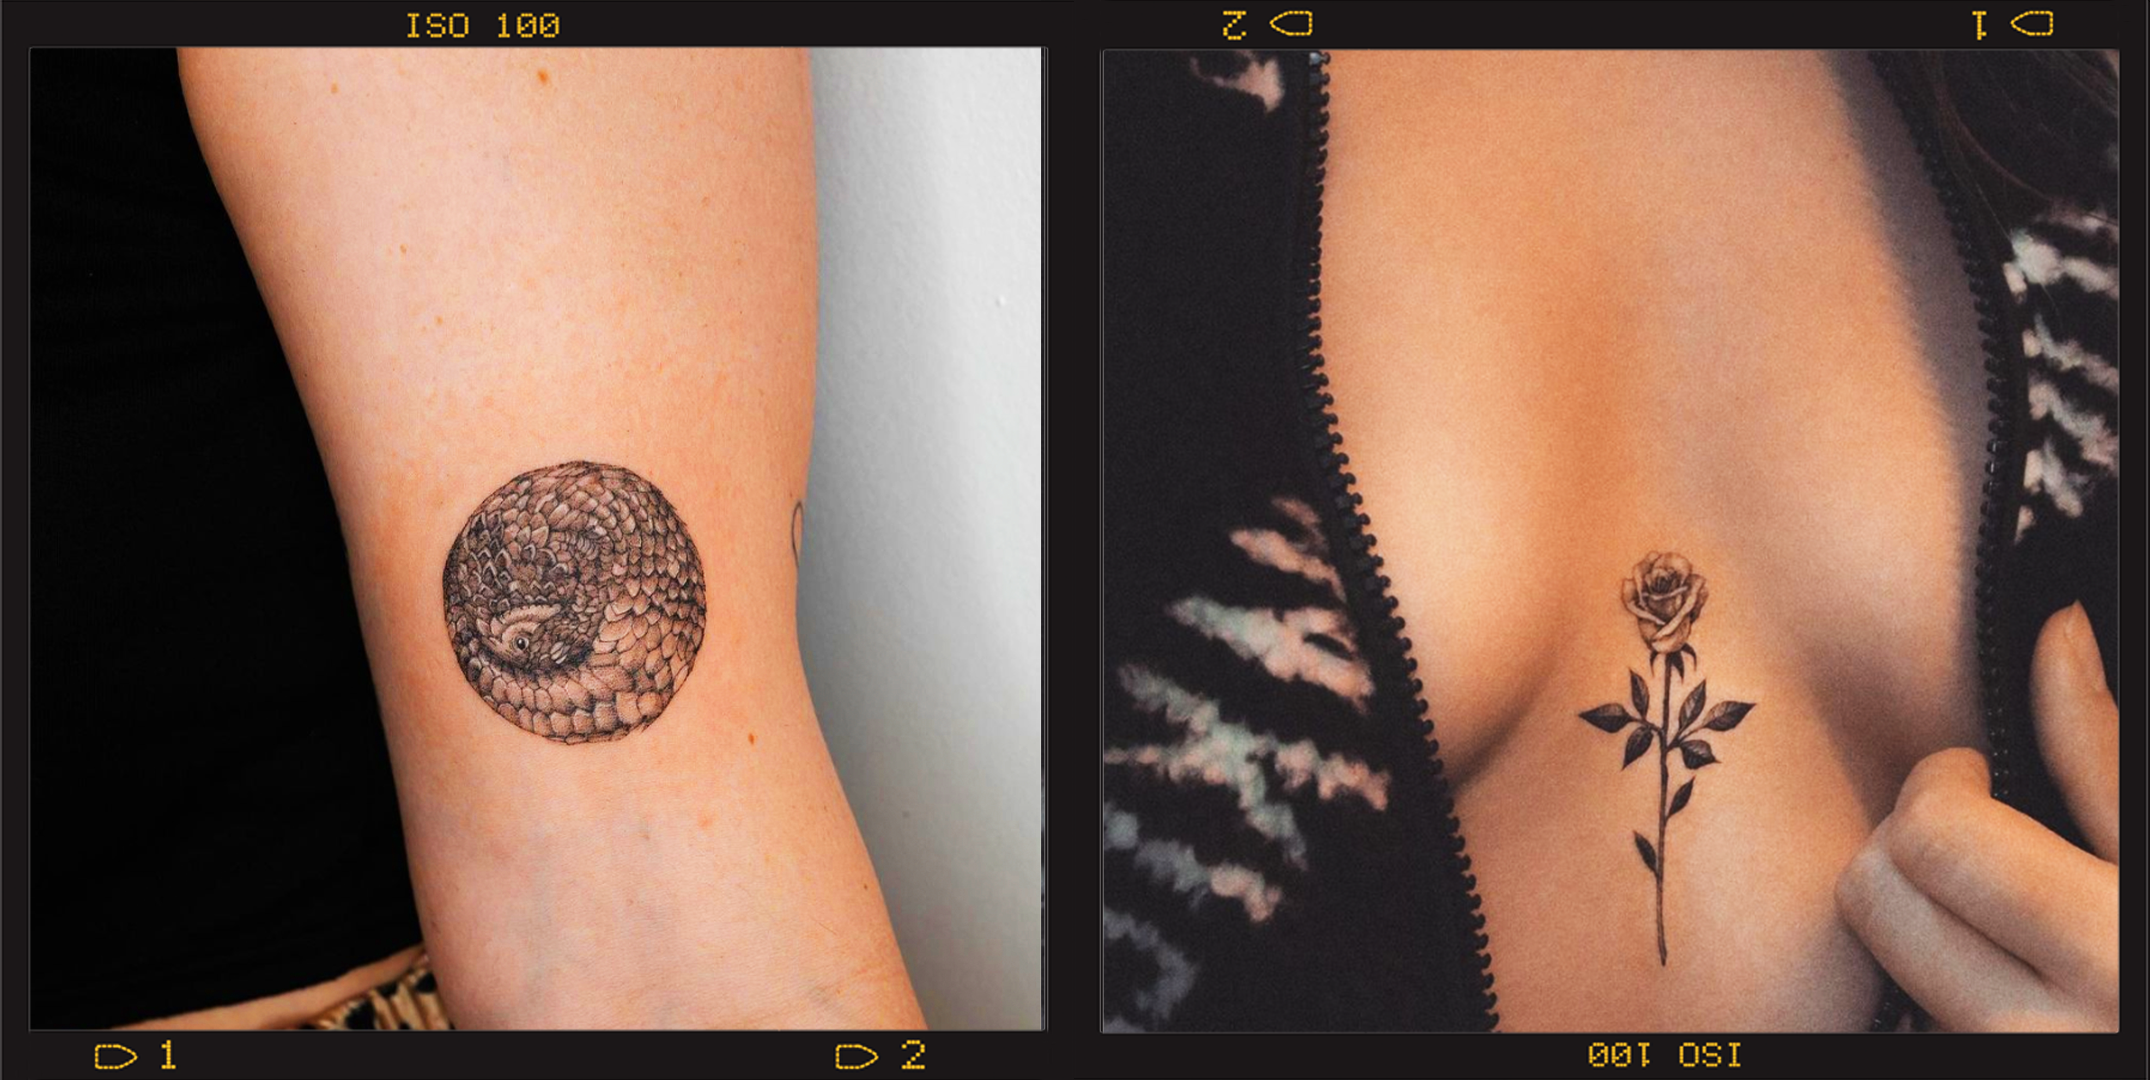 Best Facial Tattoos Images On Pinterest Tattoo Girls 1